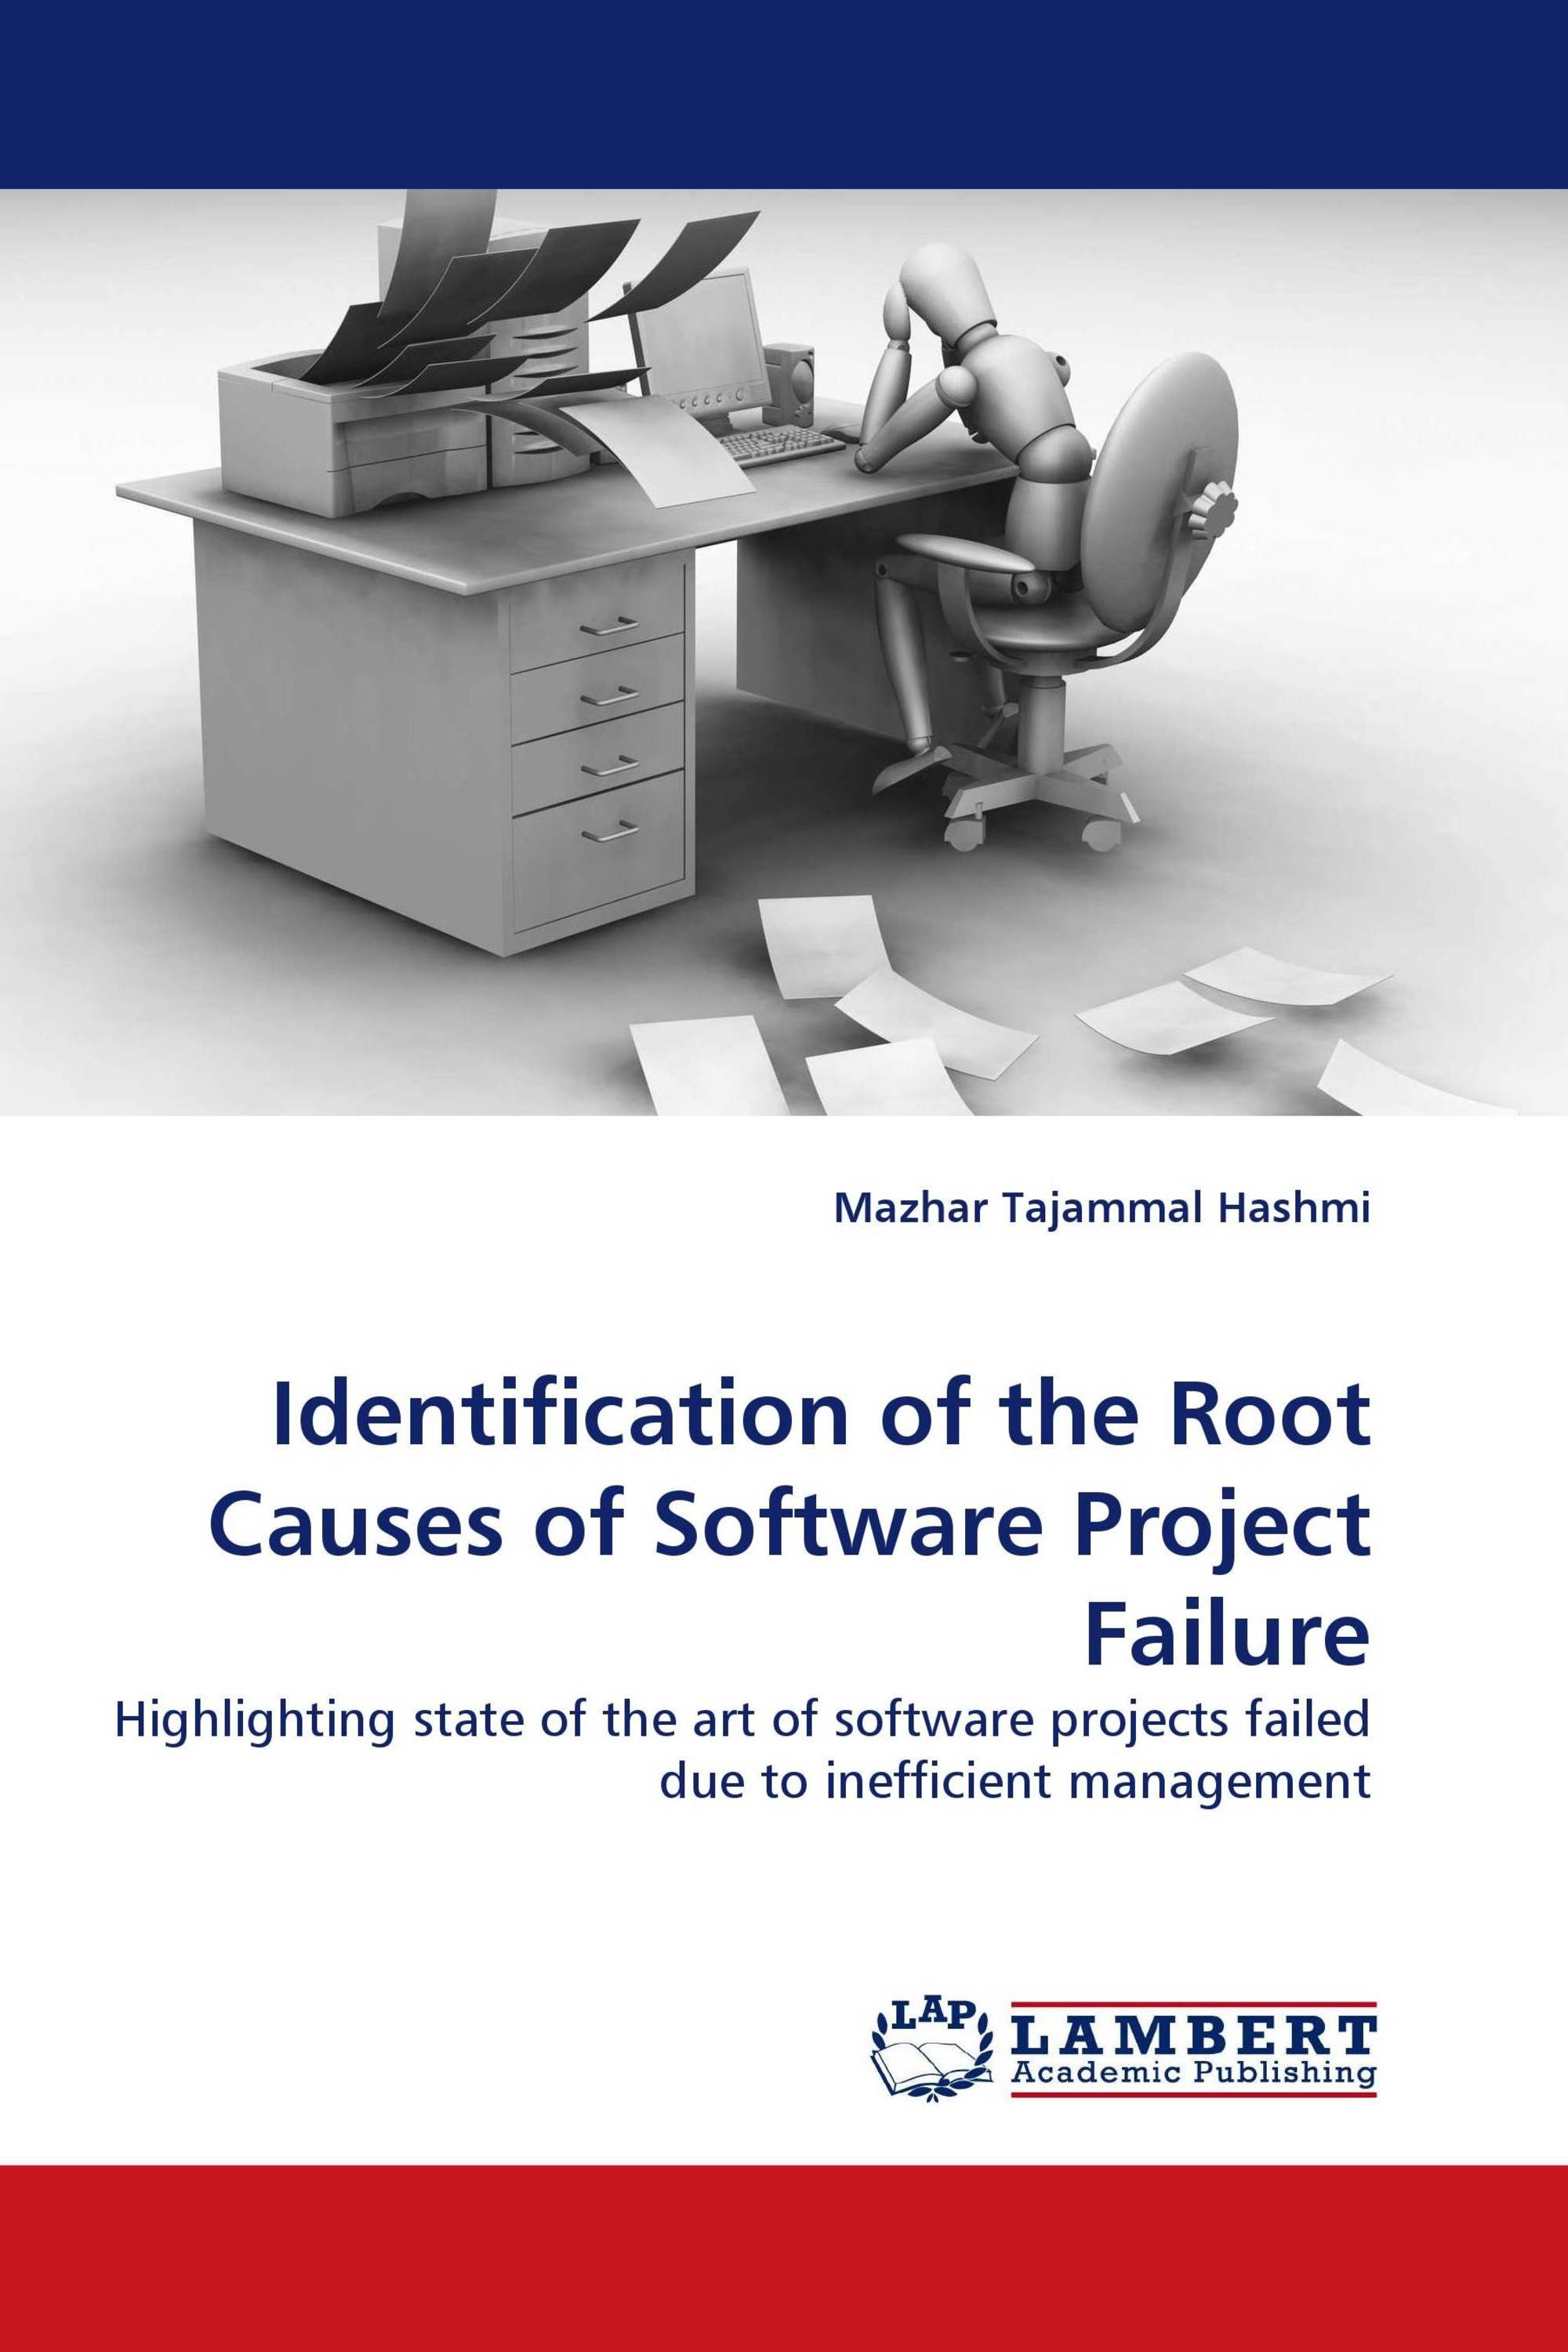 software development project failure case study